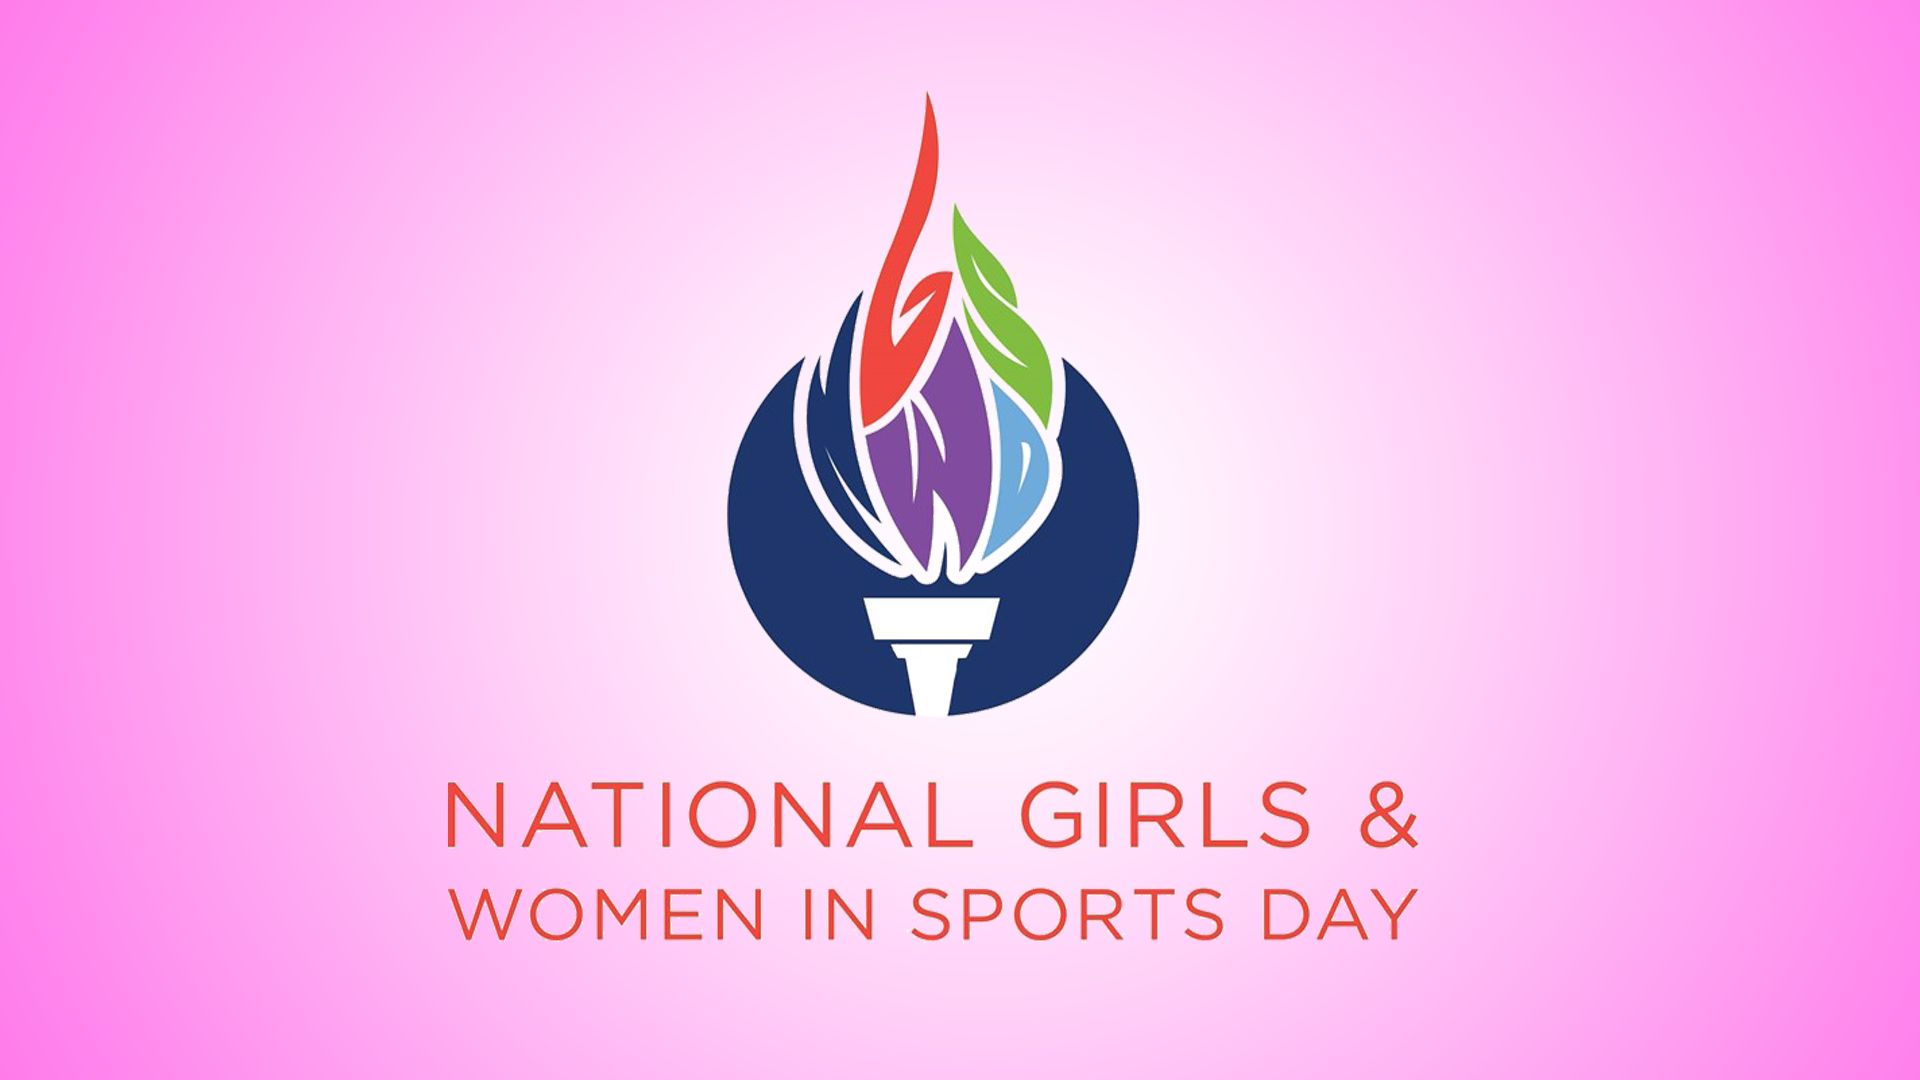 Enjoy the celebration of National Girls & Women in Sports Day